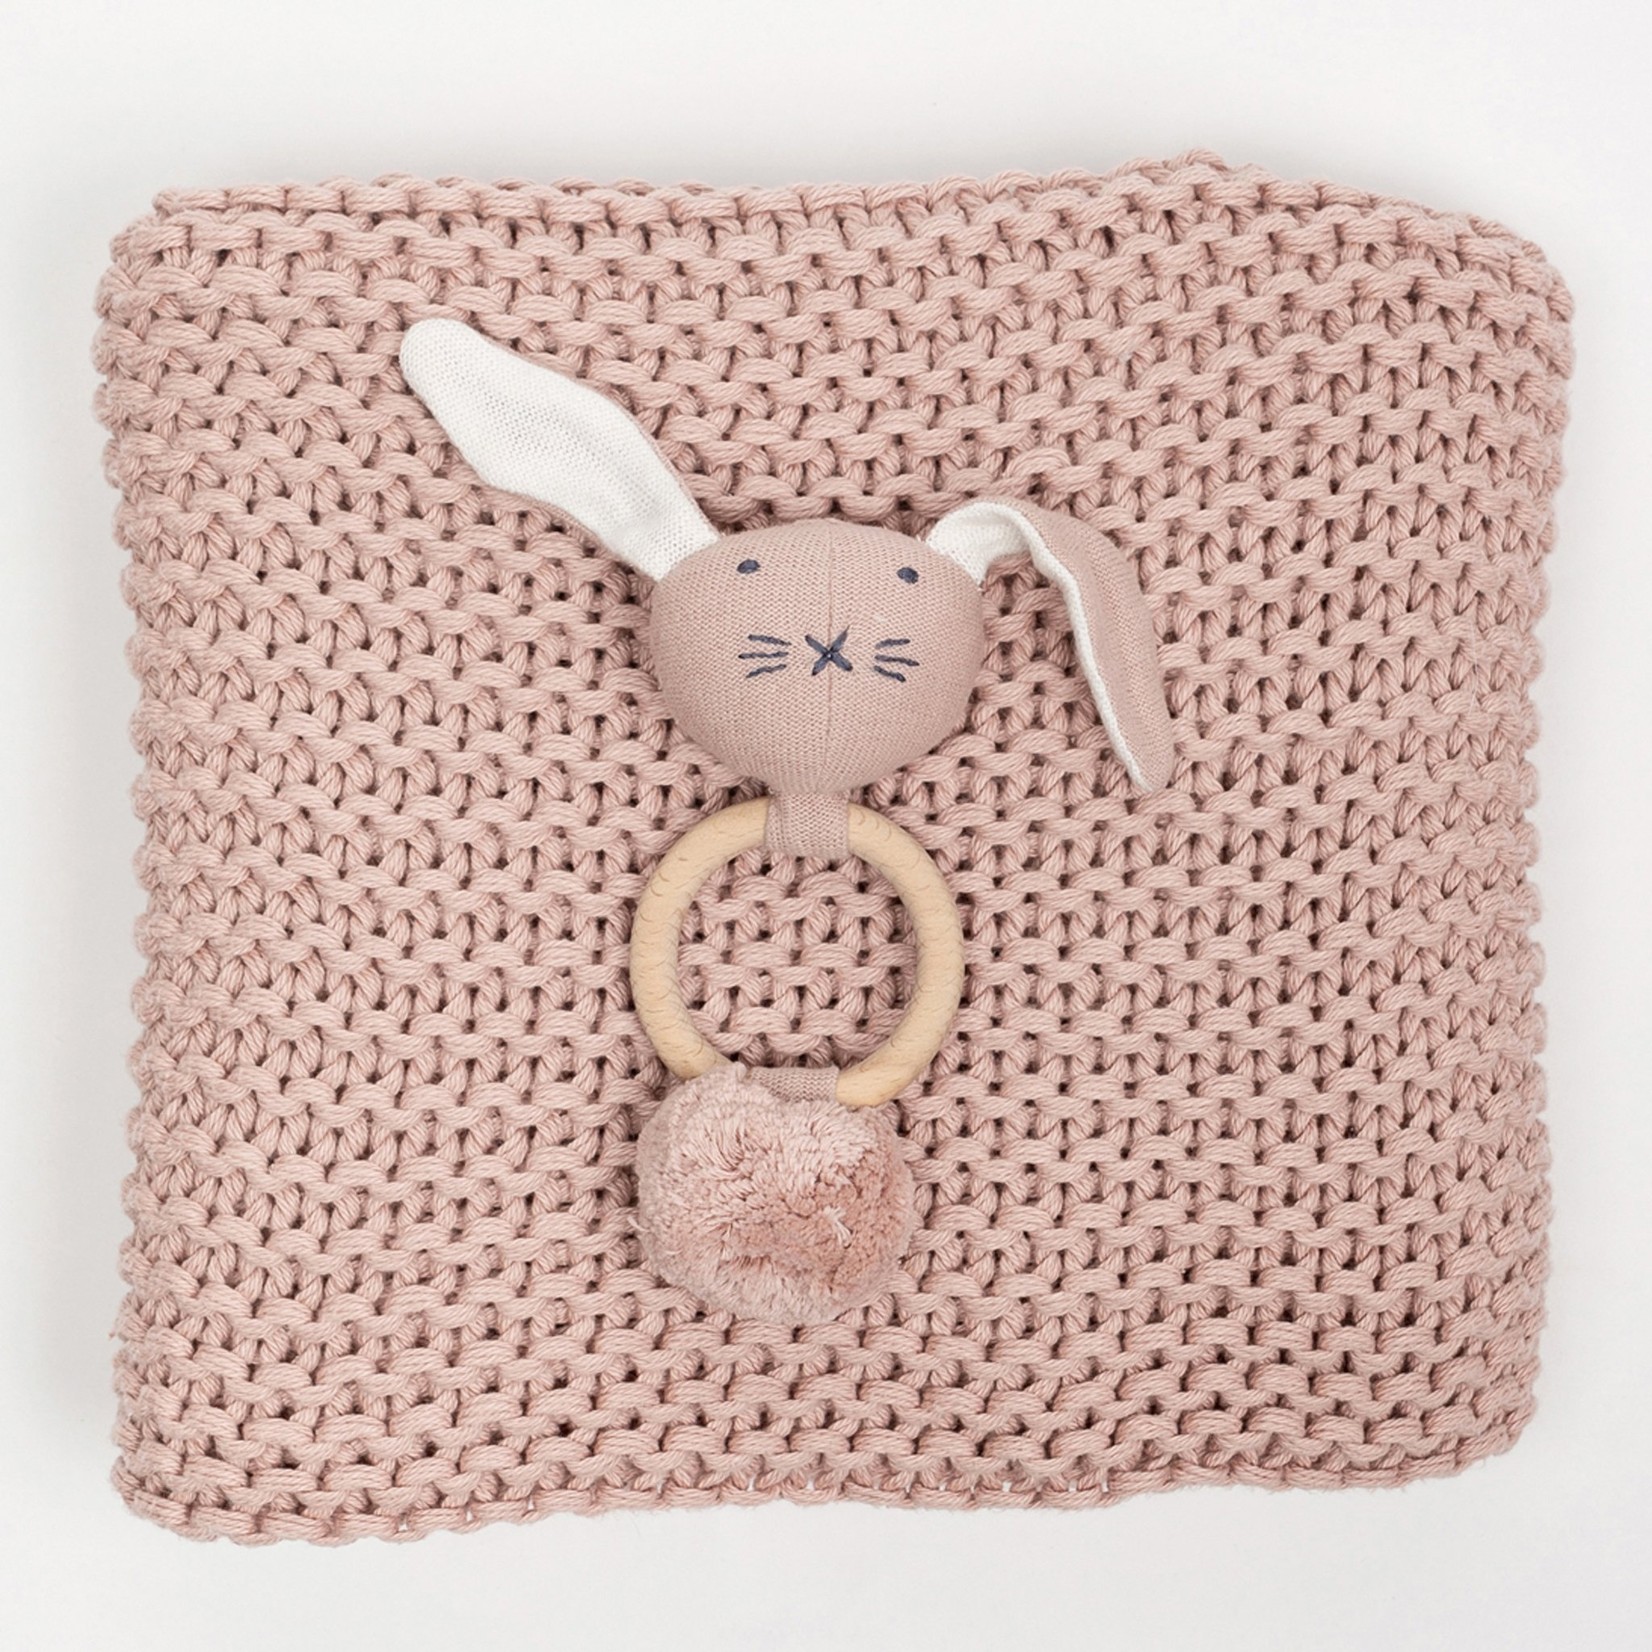 Zestt Organic Cotton Comfy Knit Baby Gift Set